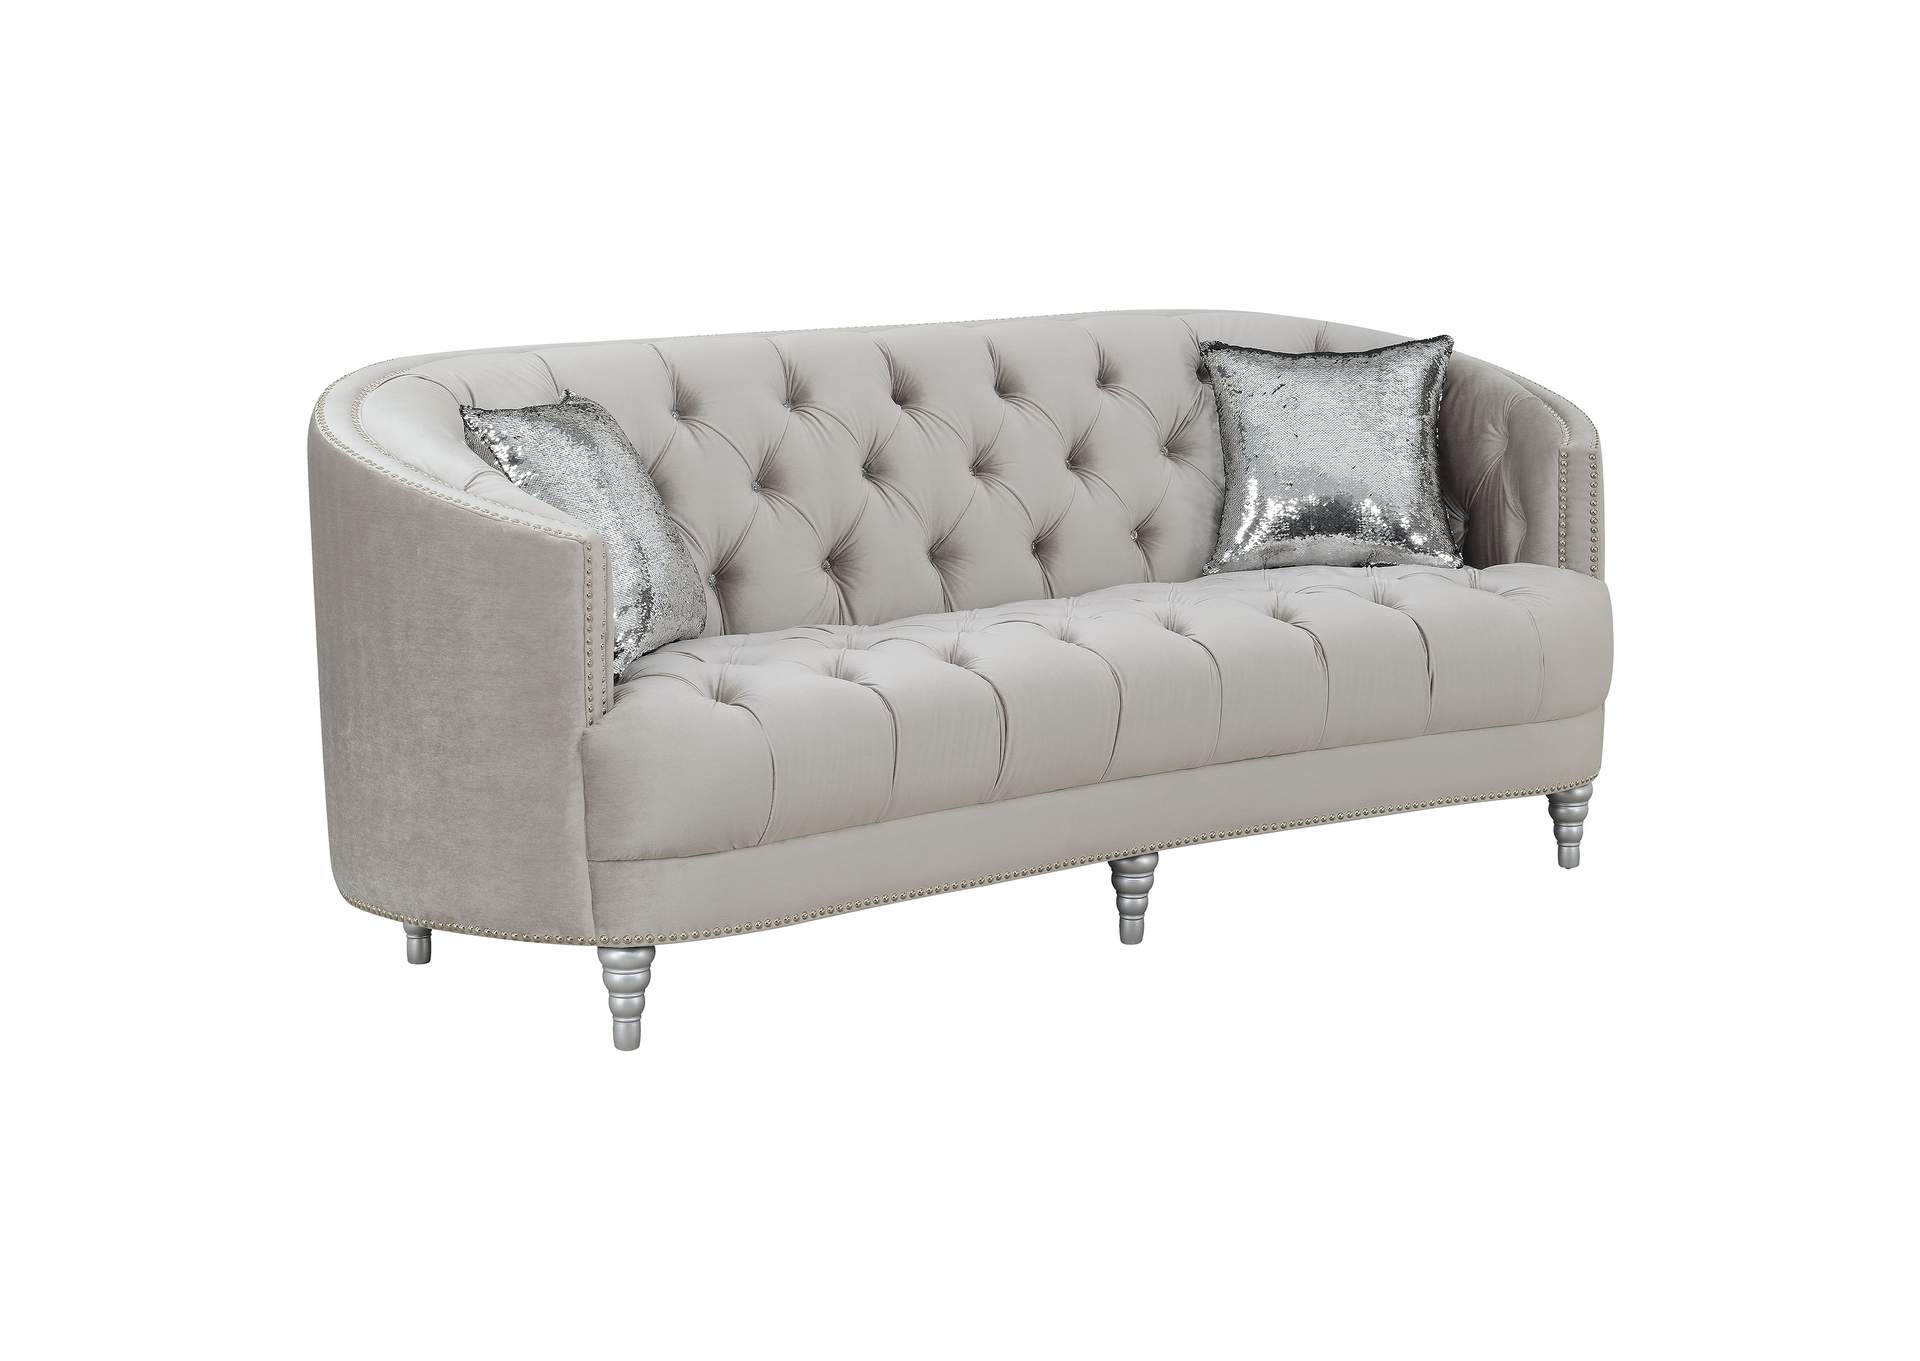 Avonlea 2-piece Tufted Living Room Set Grey,Coaster Furniture